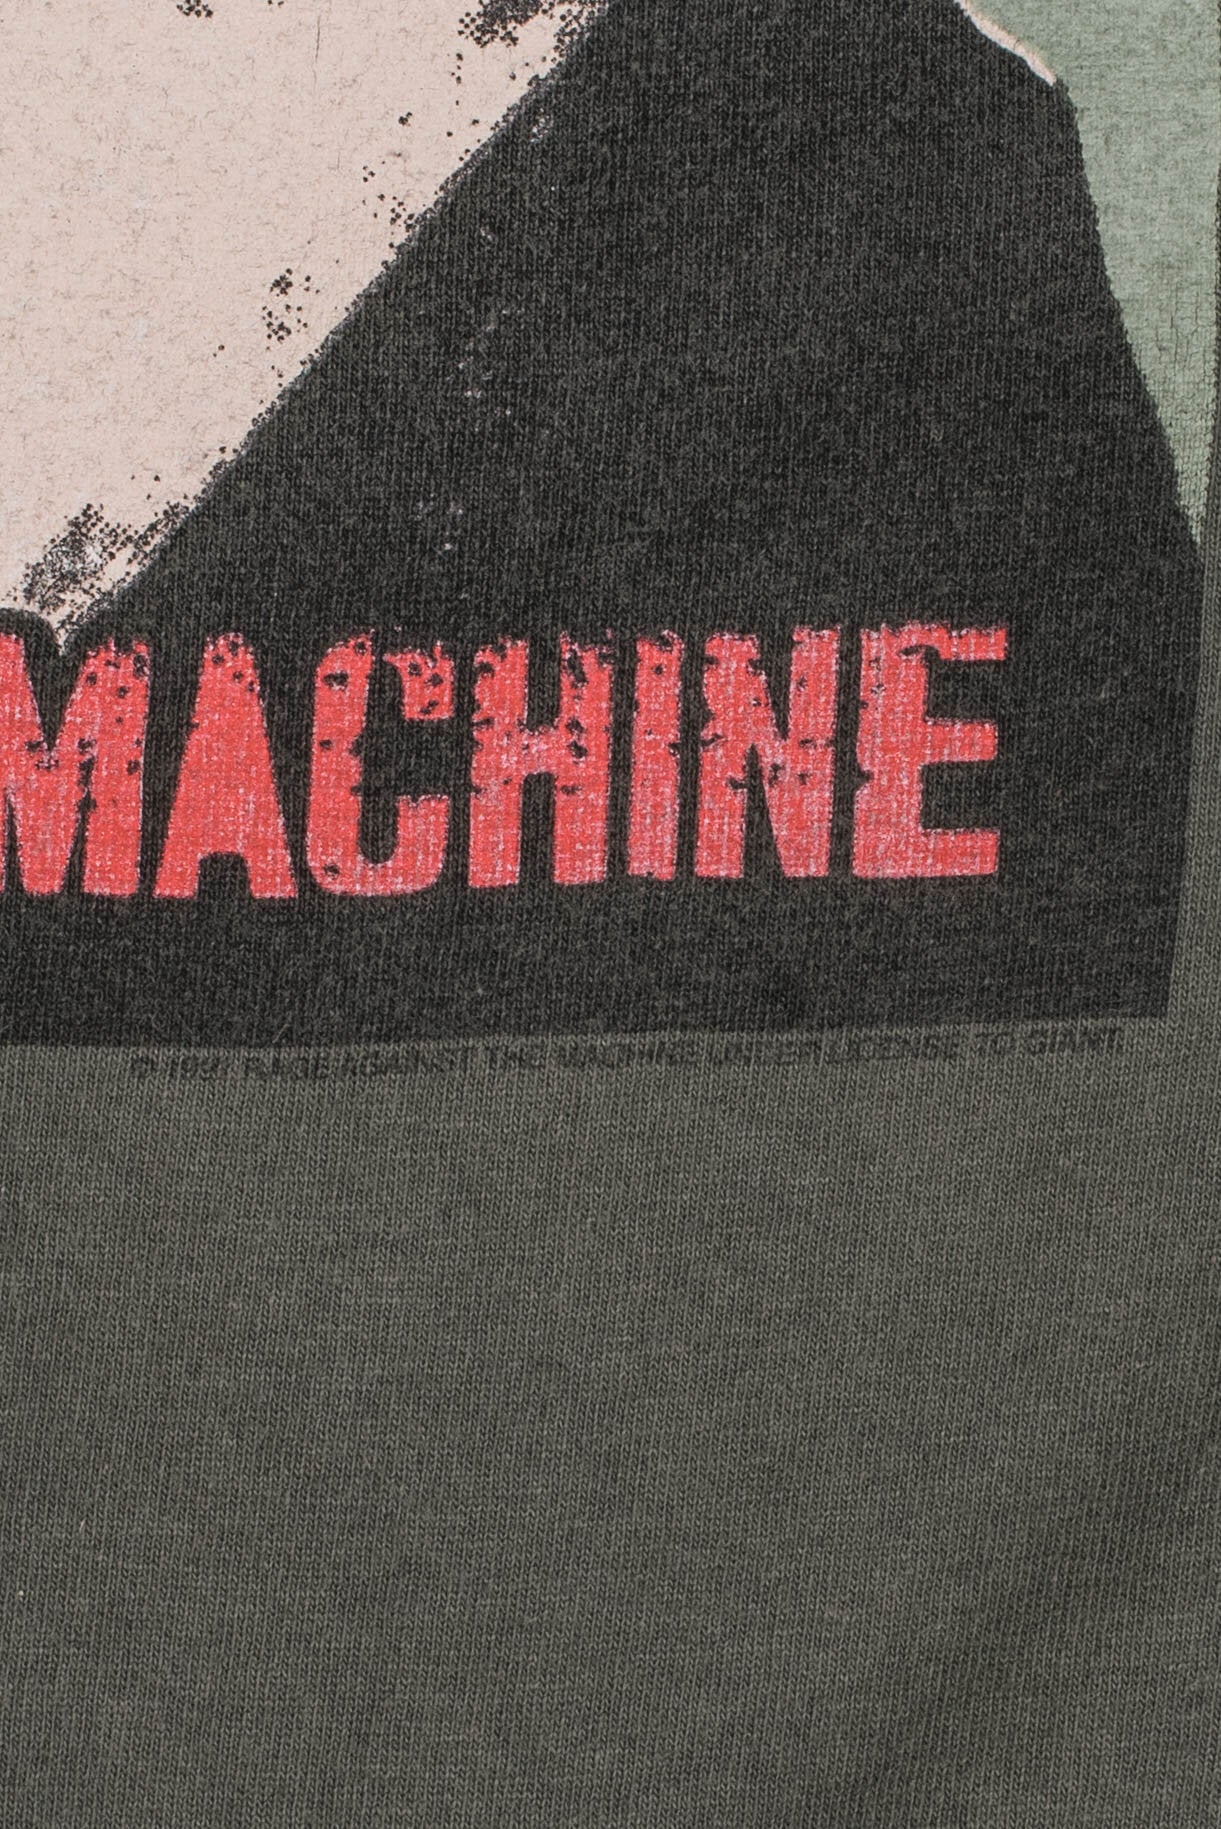 Vintage 1997 Rage Against the Machine Emiliano Zapata T-Shirt